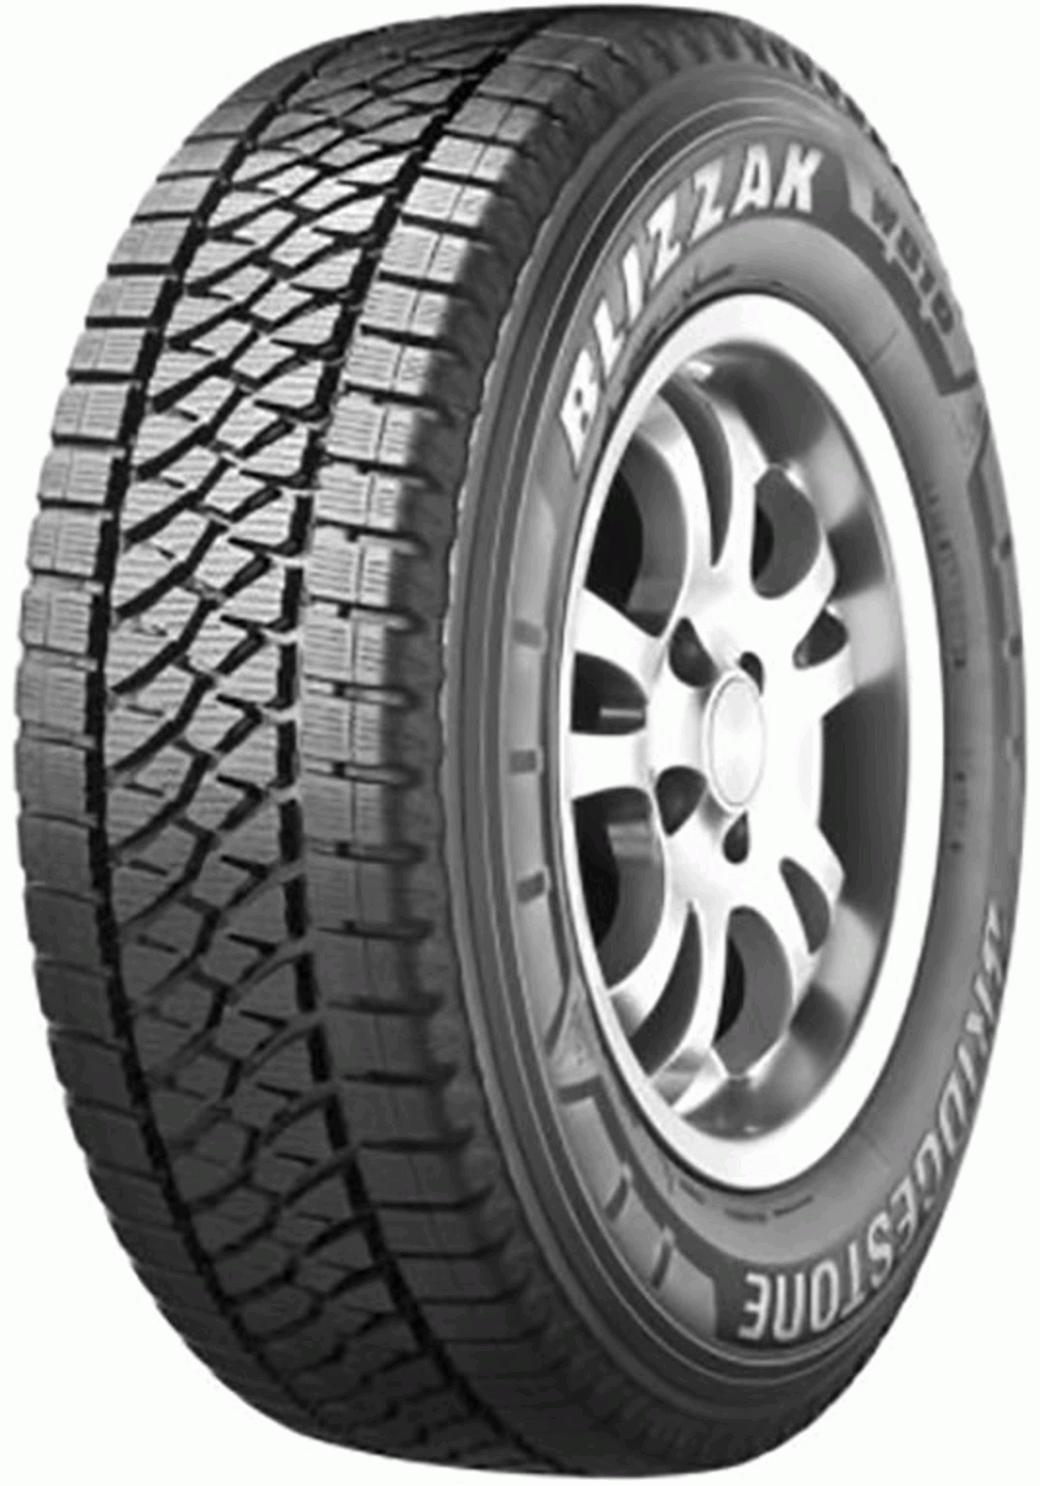 Bridgestone Blizzak W810 - Tyre Reviews and Tests